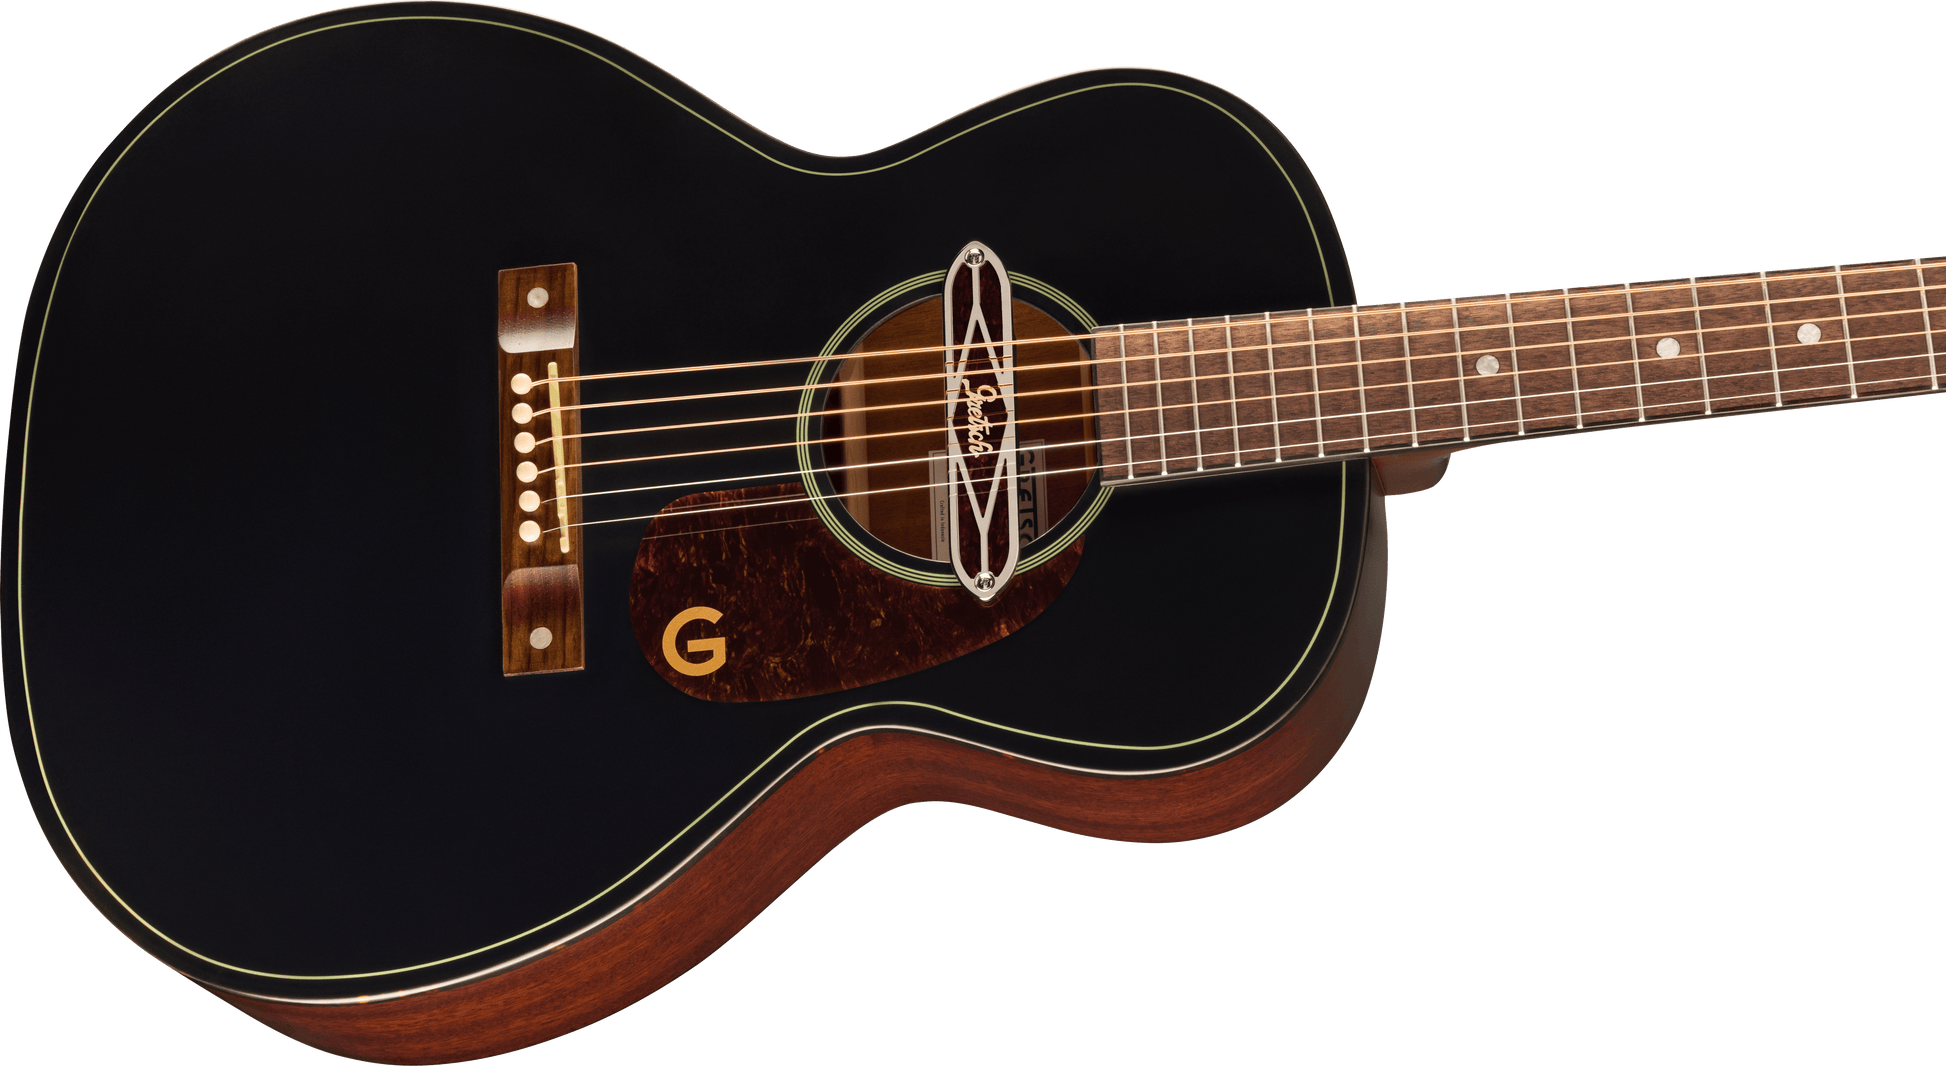 Gretsch Deltoluxe Concert Acoustic Guitar - Black - Joondalup Music Centre